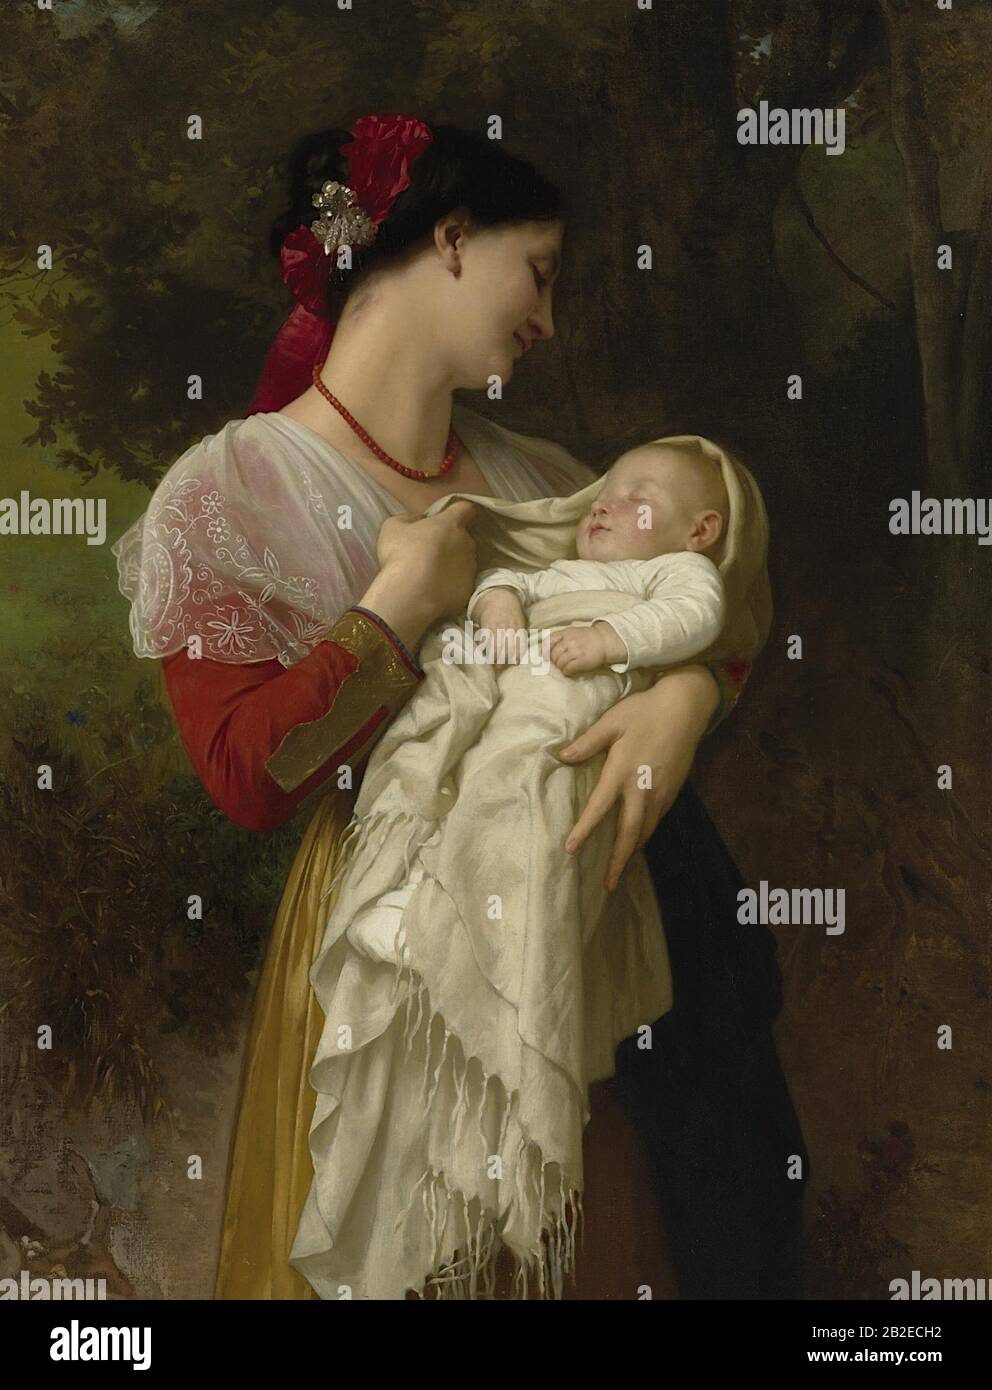 Ammirazione materna (1869) Pittura accademica francese di William-Adolphe Bouguereau - immagine Di altissima qualità e risoluzione Foto Stock